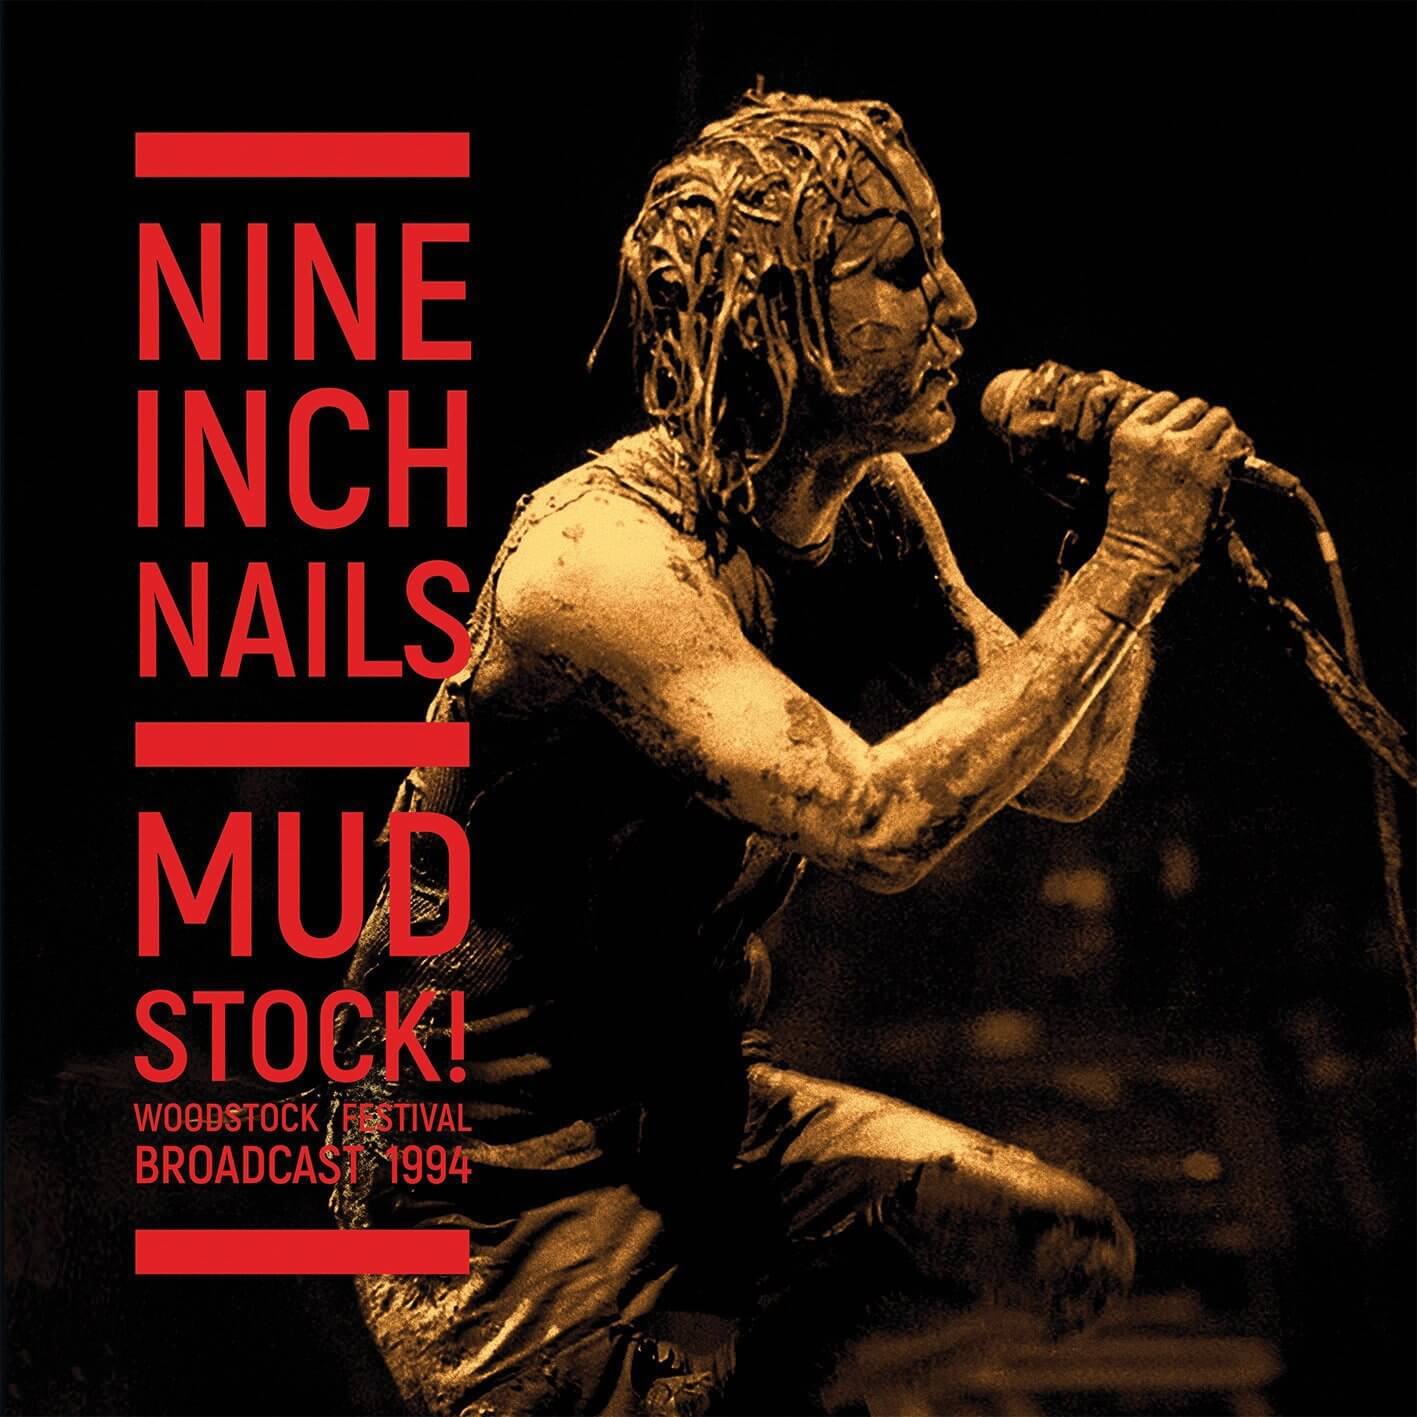 Nine Inch Nails MUDSTOCK! WOODSTOCK FESTIVAL BROADCAST 1994 2LP